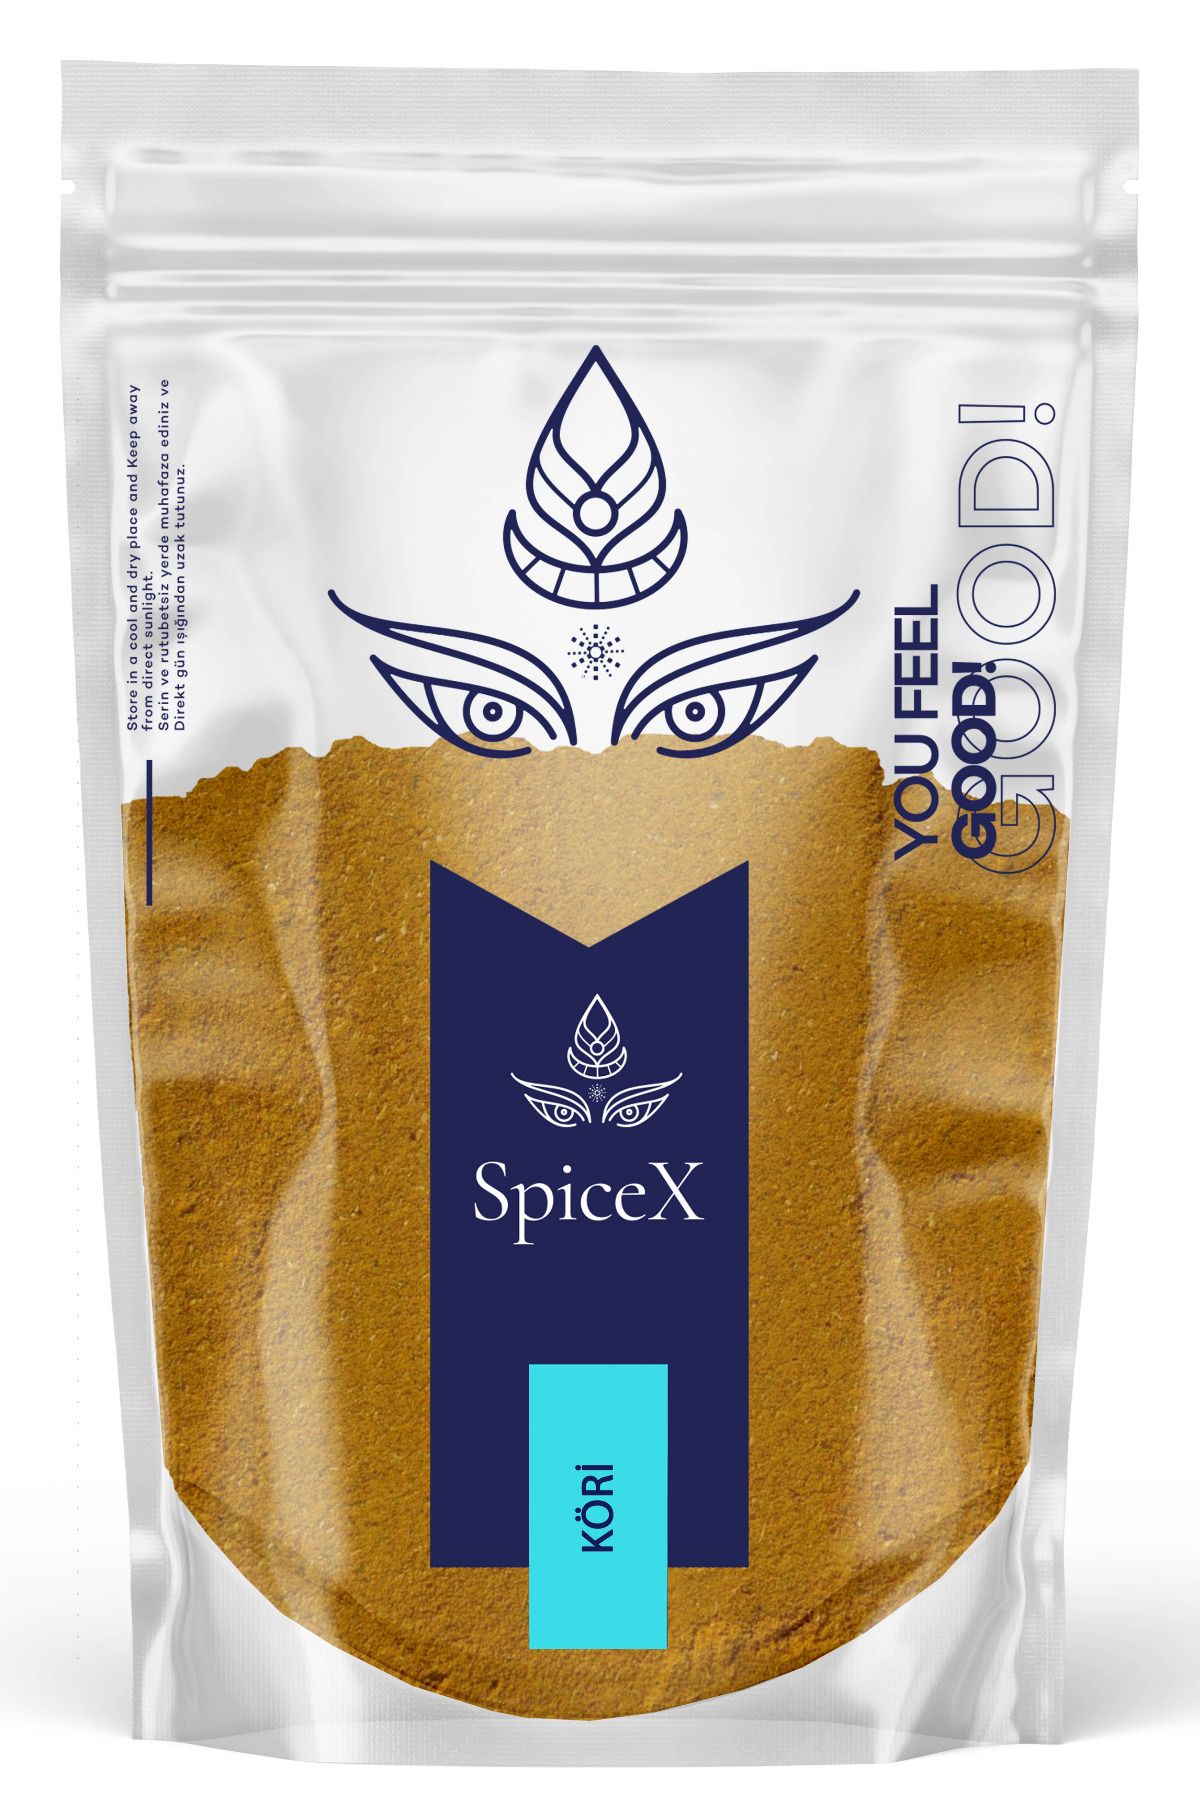 The Spicex Organic SpiceX Köri 100g